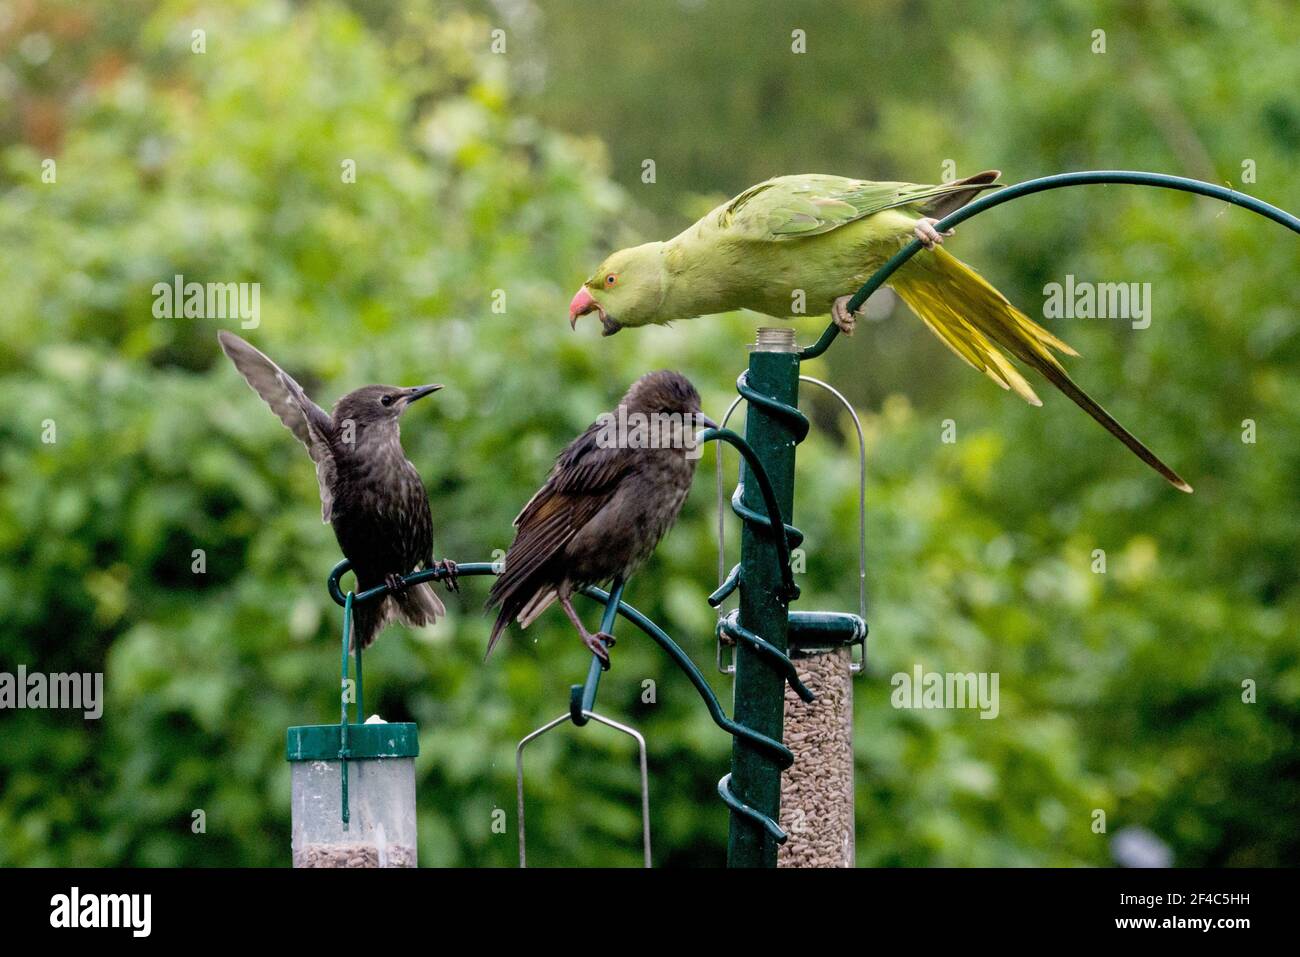 Rose-ringed or Ring-necked parakeet [Psittacula krameri] squabbling with a fledgling Starling [Sturnus vulgaris] on bird feeder.  London, Uk. Stock Photo